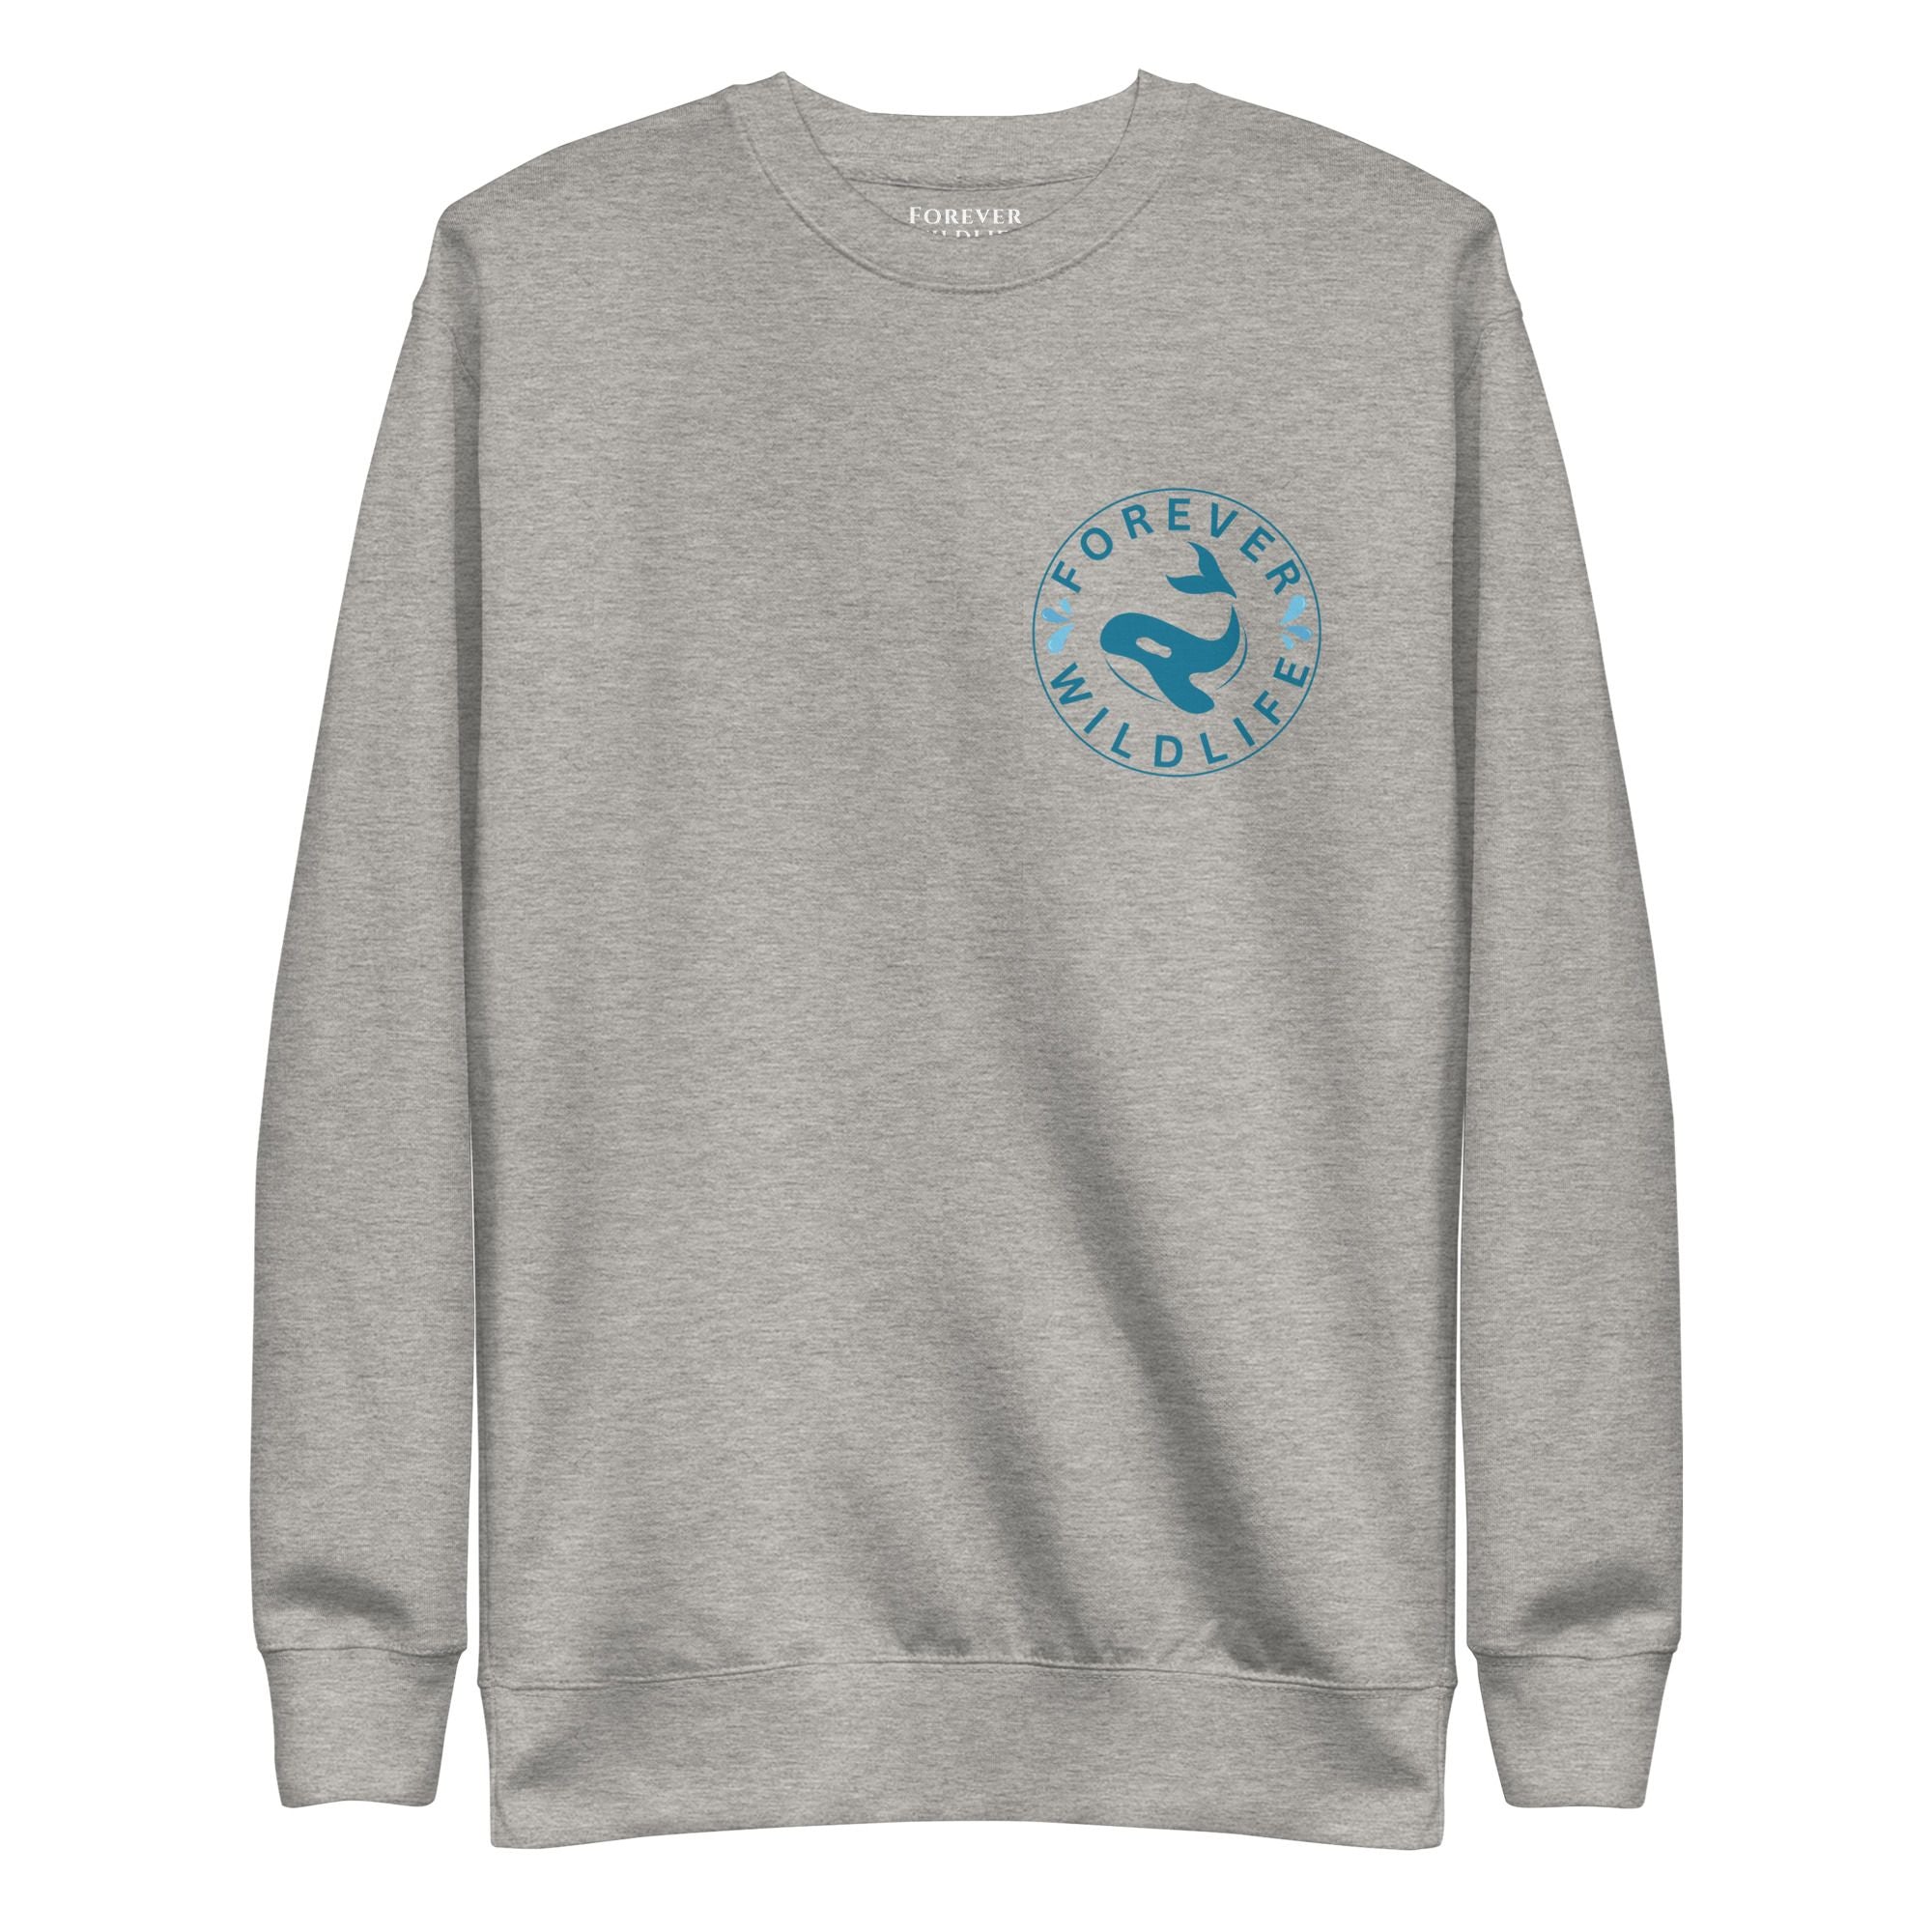 Orca Sweatshirt, beautiful Carbon Grey Orca Sweatshirt with Killer Whales on the sweatshirt by Forever Wildlife selling Wildlife Sweatshirts.